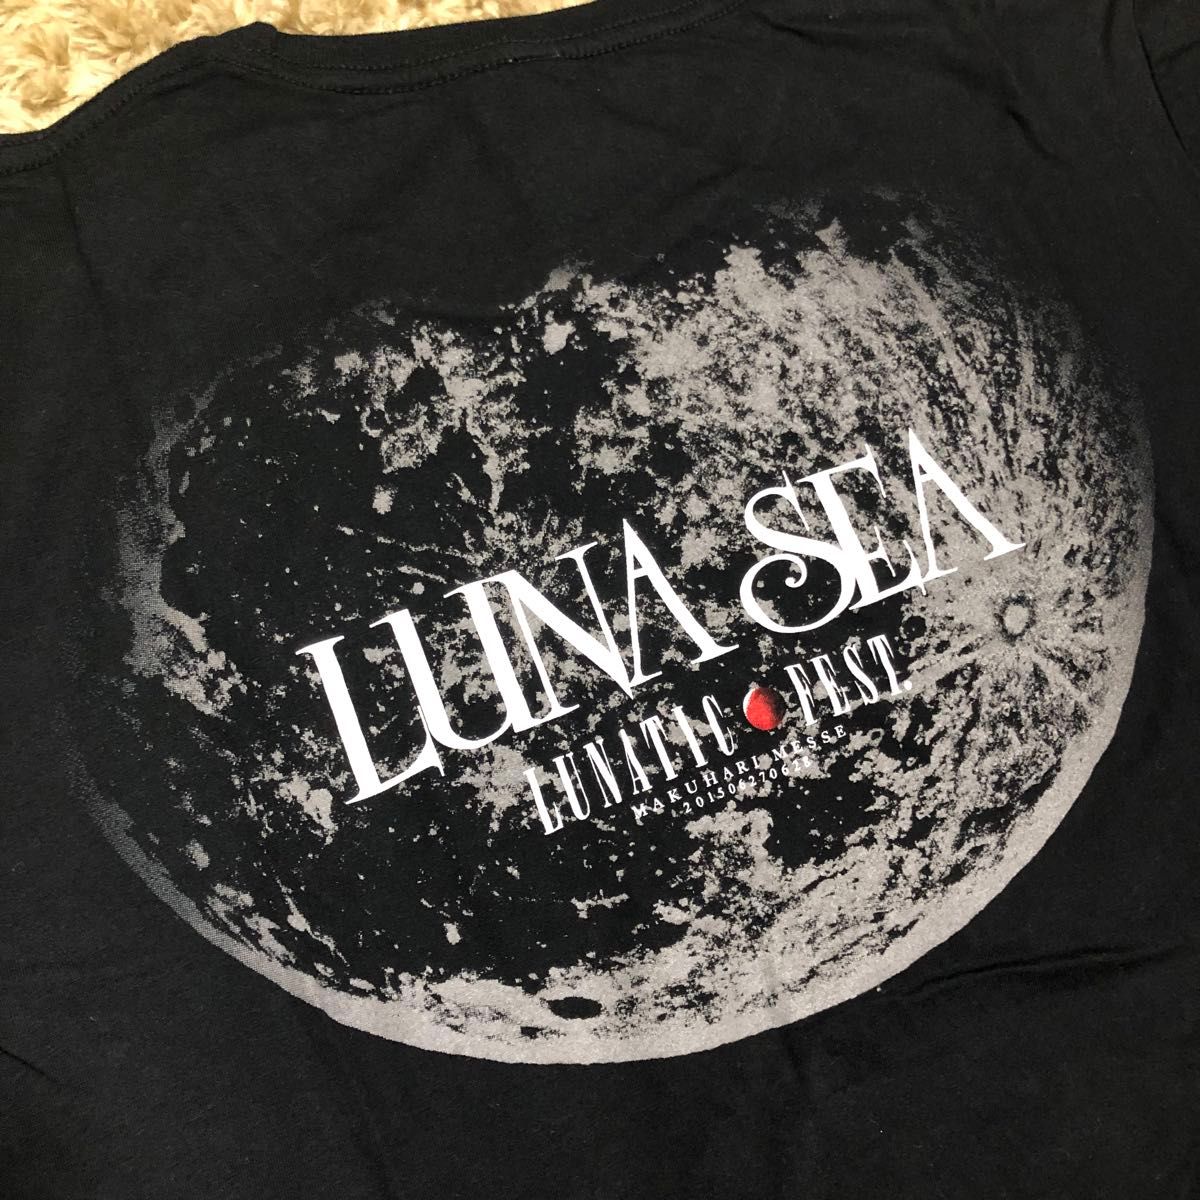 LUNA SEA LUNATIC FEST 2015 バンドT シャツ ブラック